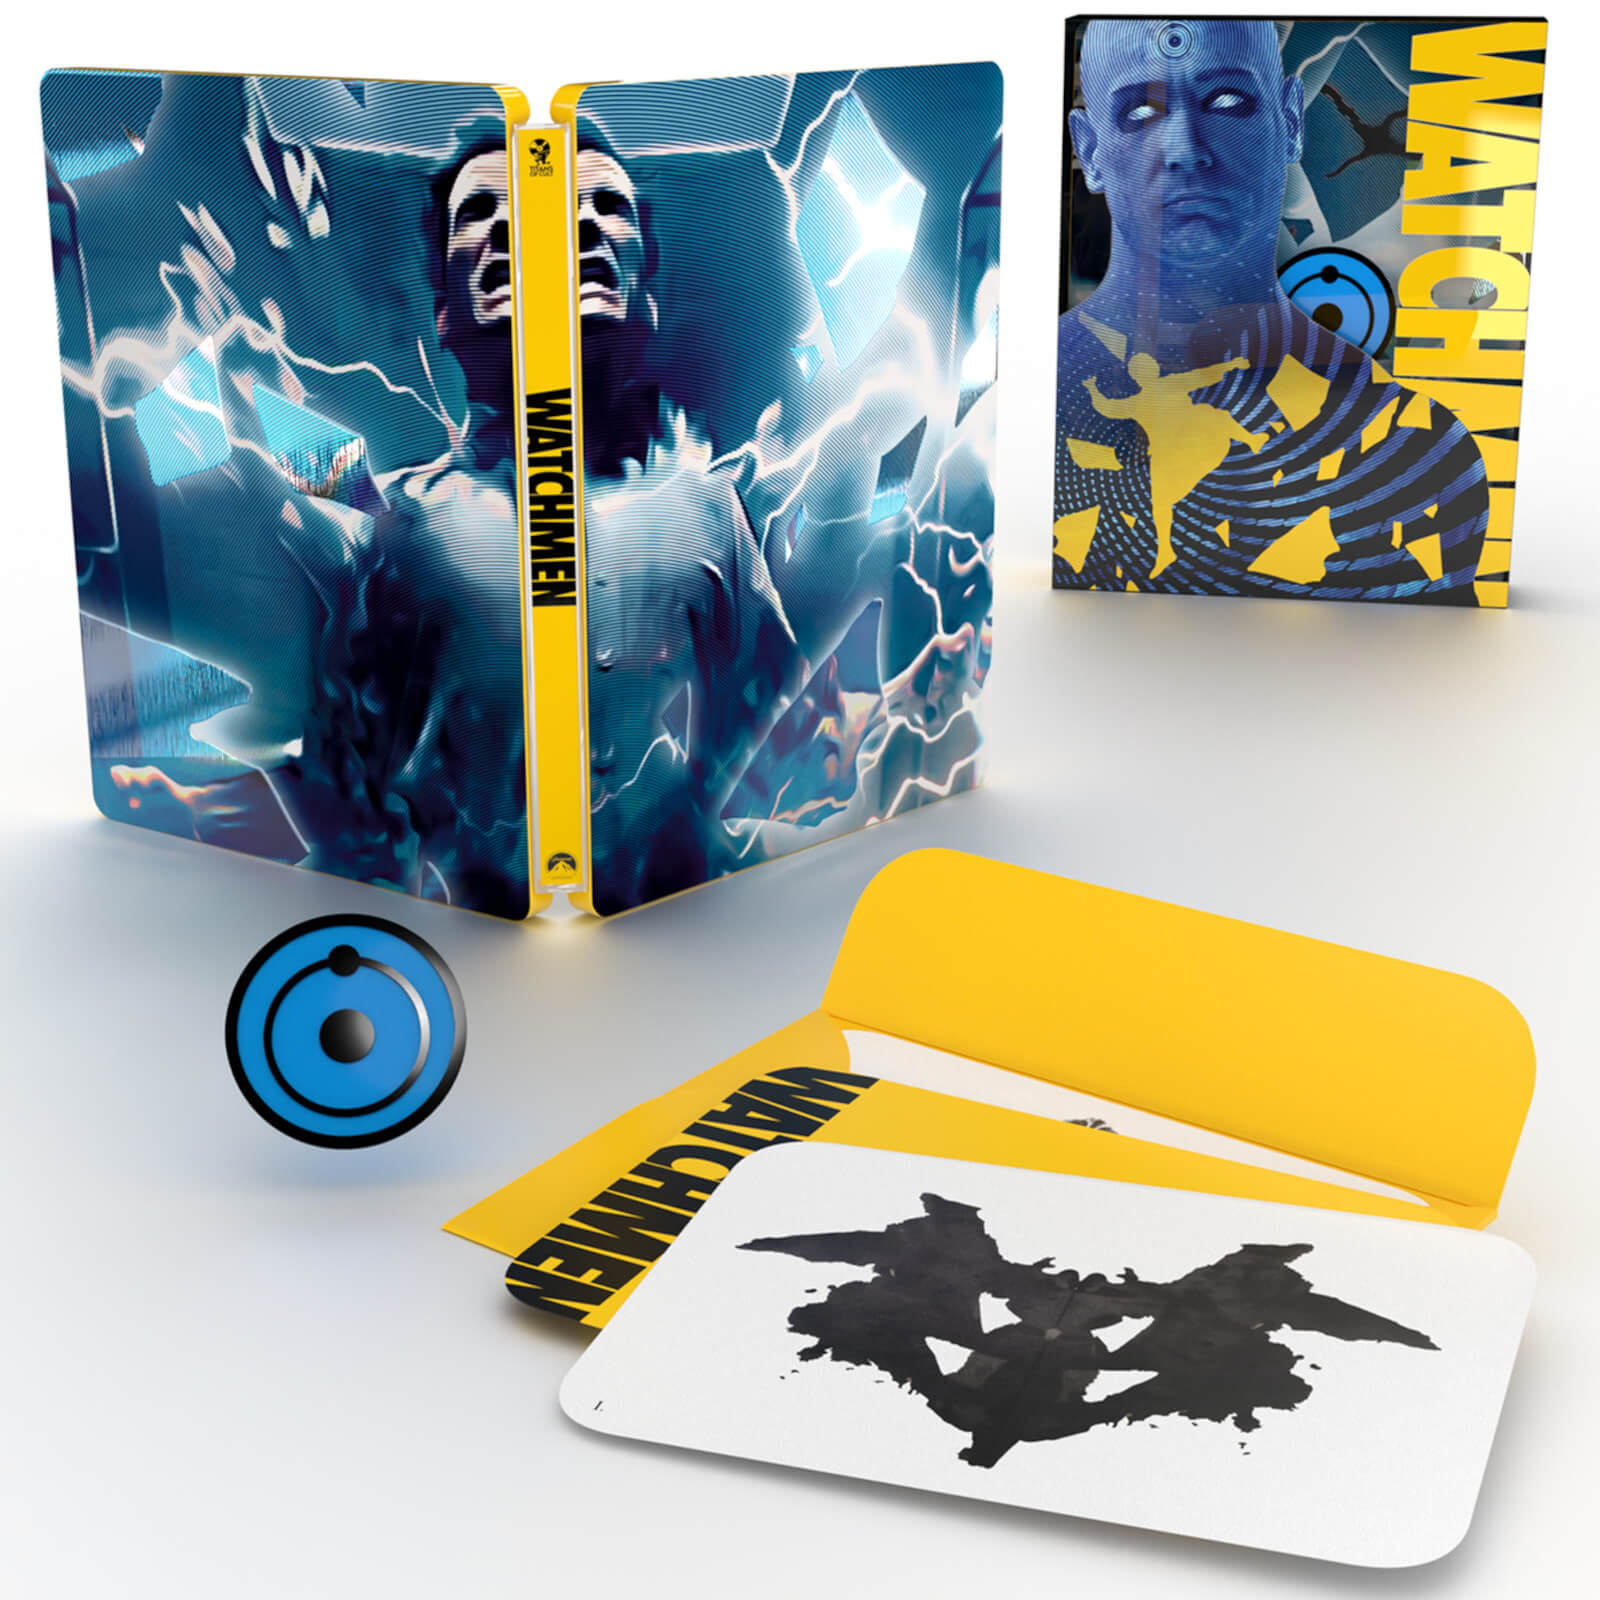 Watchmen: The Ultimate Cut Titans of Cult 4K Ultra HD Steelbook (includes Blu-ray)